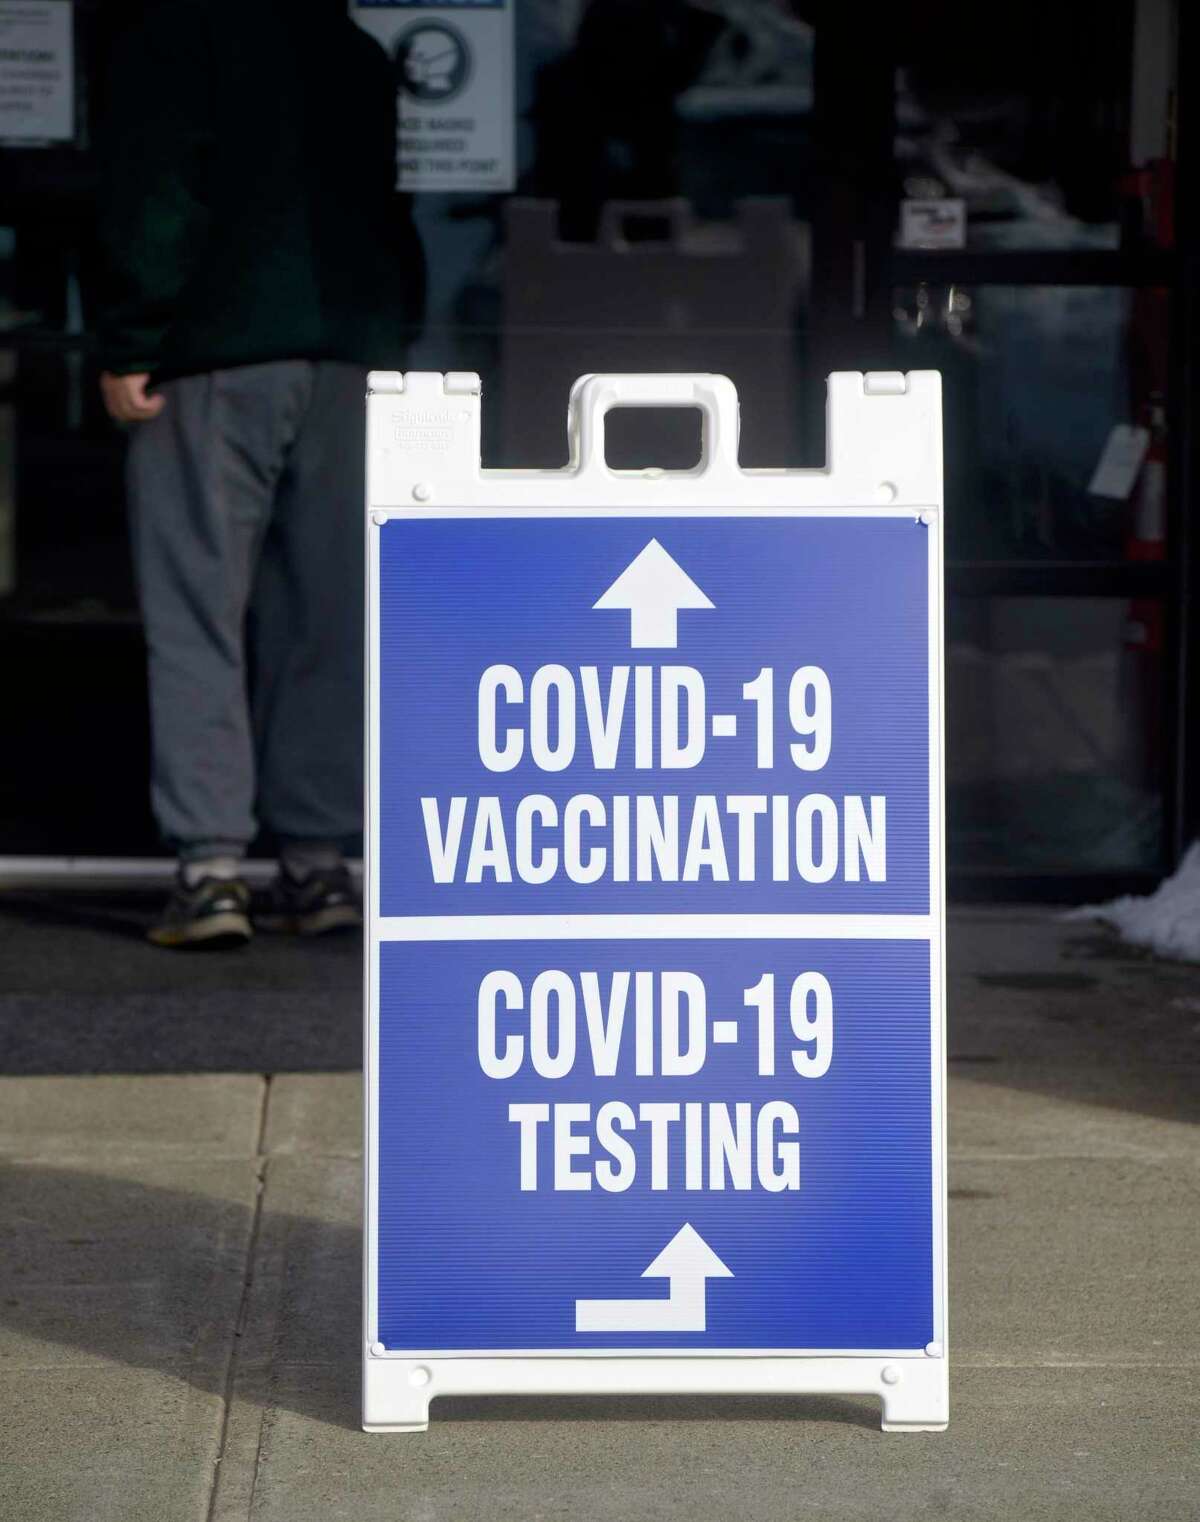 RVNAhealth COVID-19 vaccine clinic in the Yanity Gym, Ridgefield, Conn, Thursday, February 4, 2021.